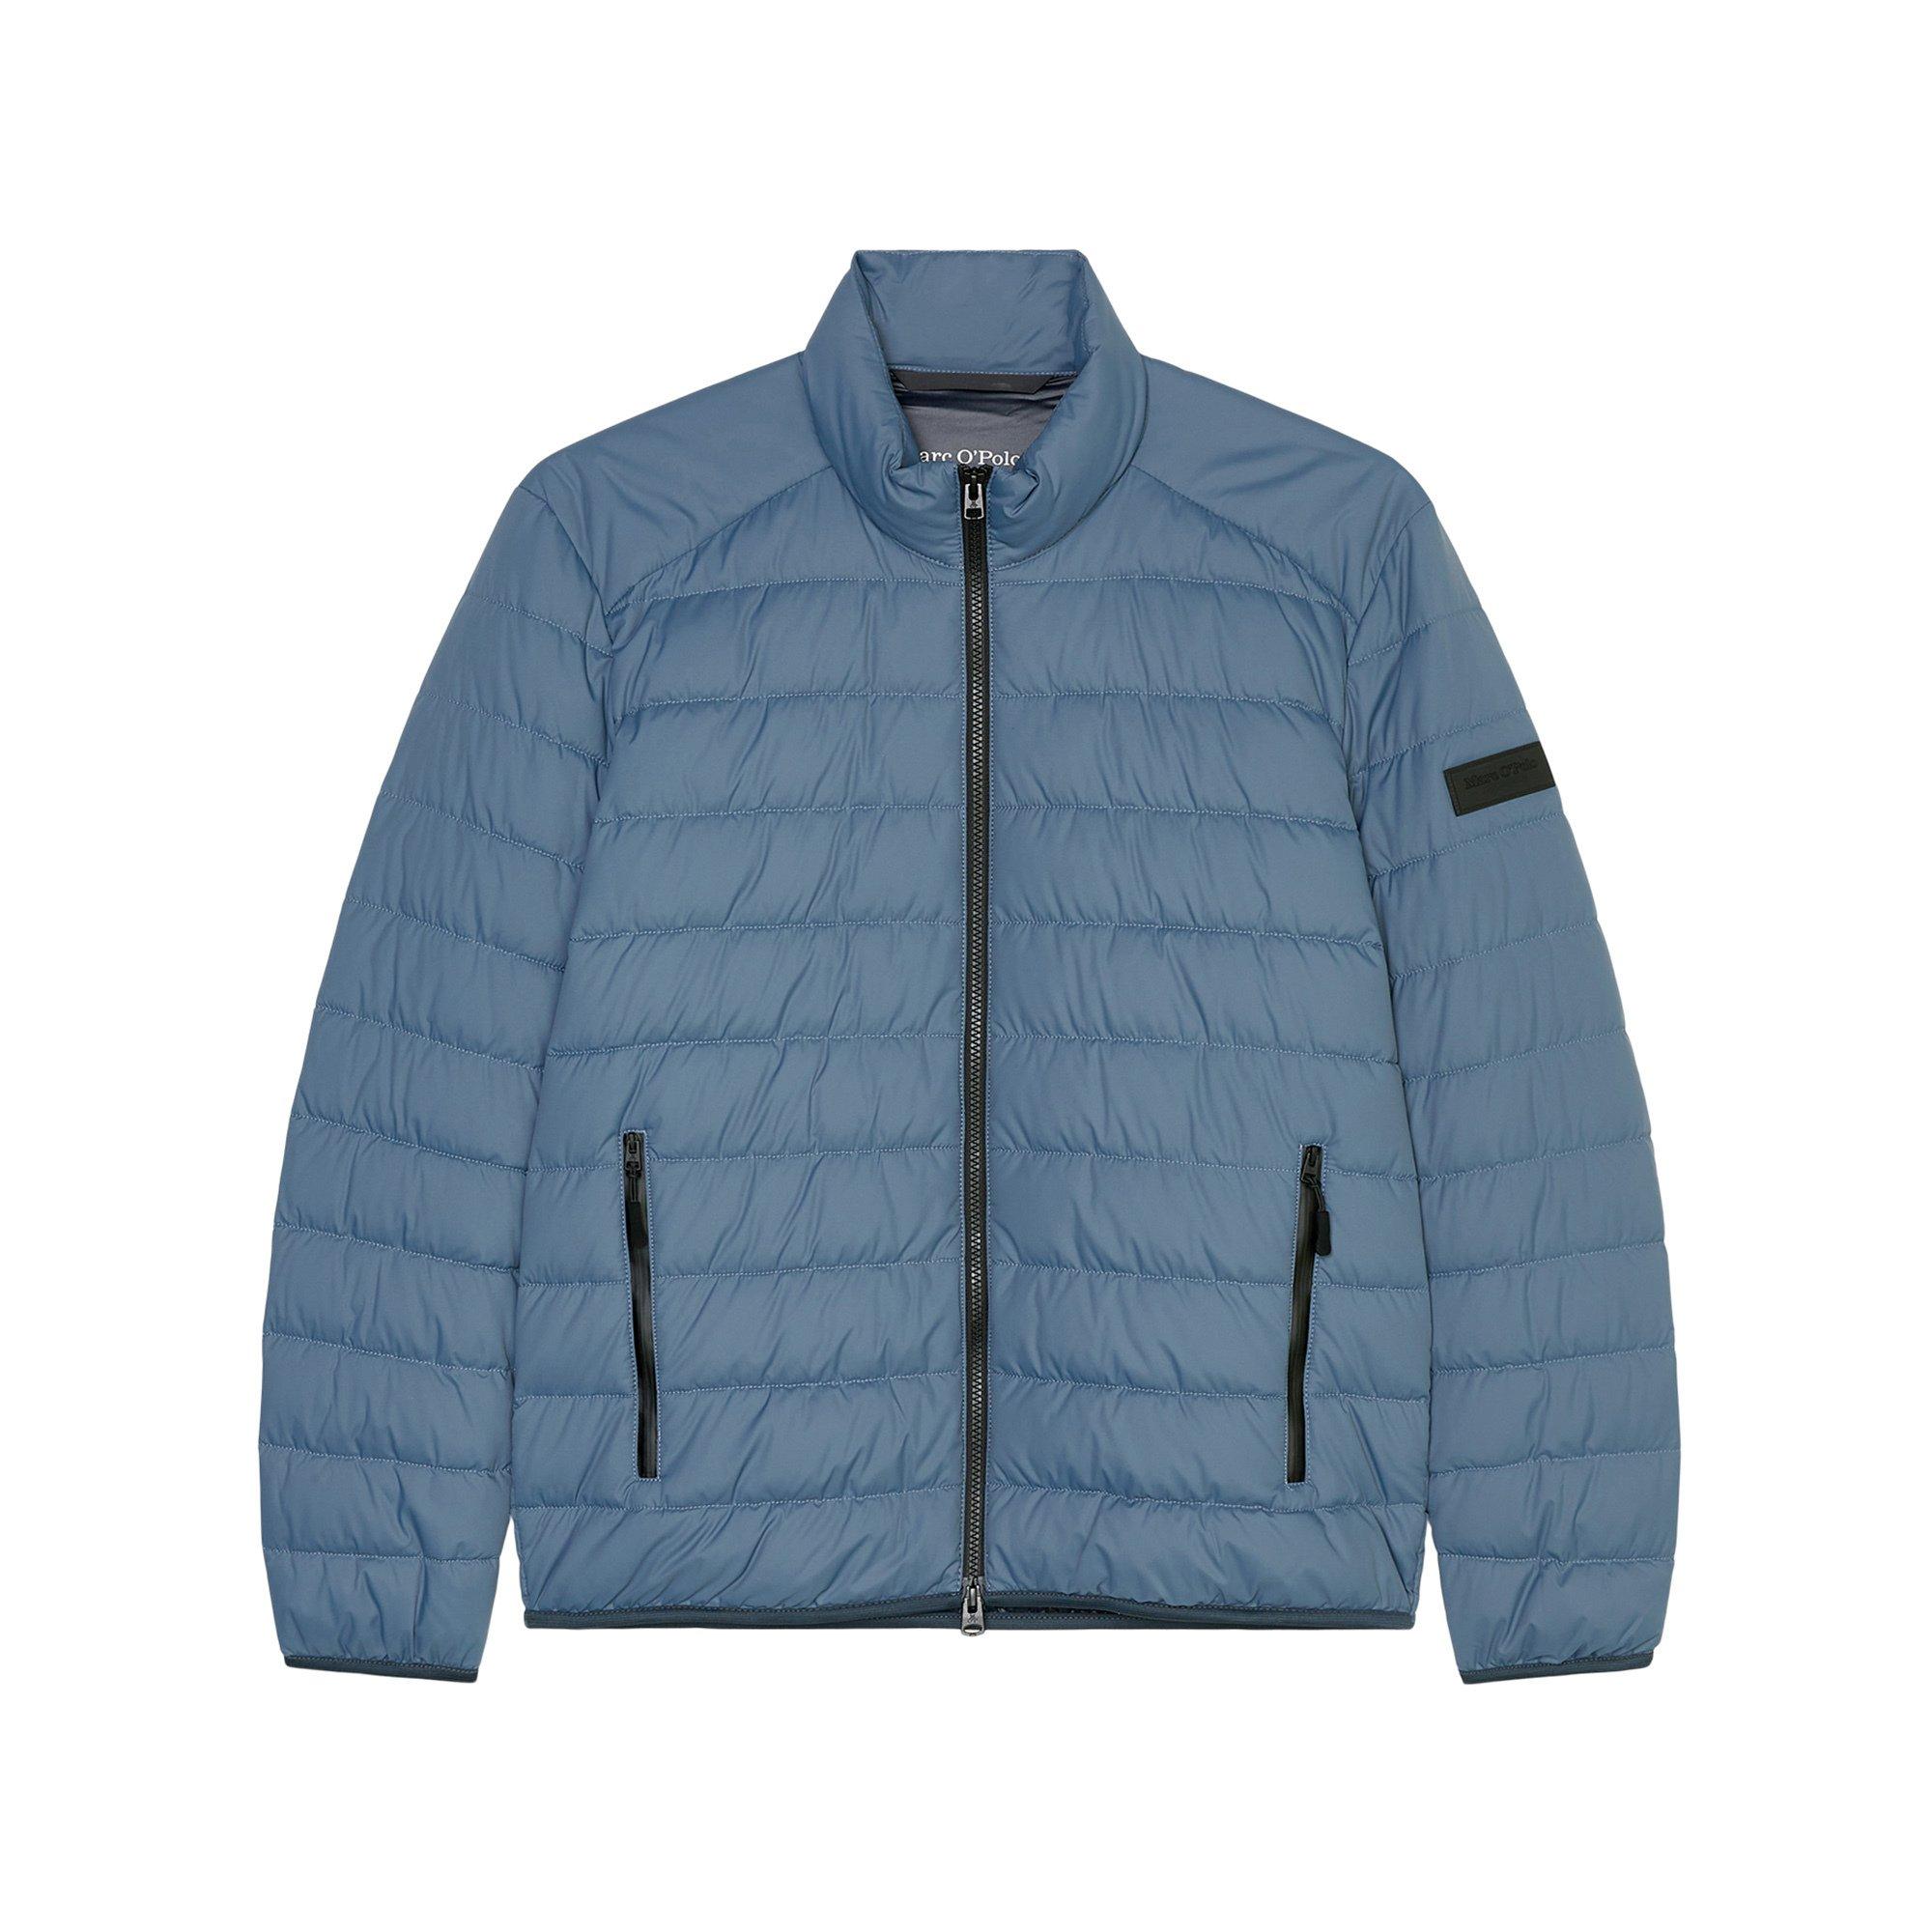 Marc O'Polo Jacket, sdnd, stand-up collar, zip pockets, elastic binding Jacke 